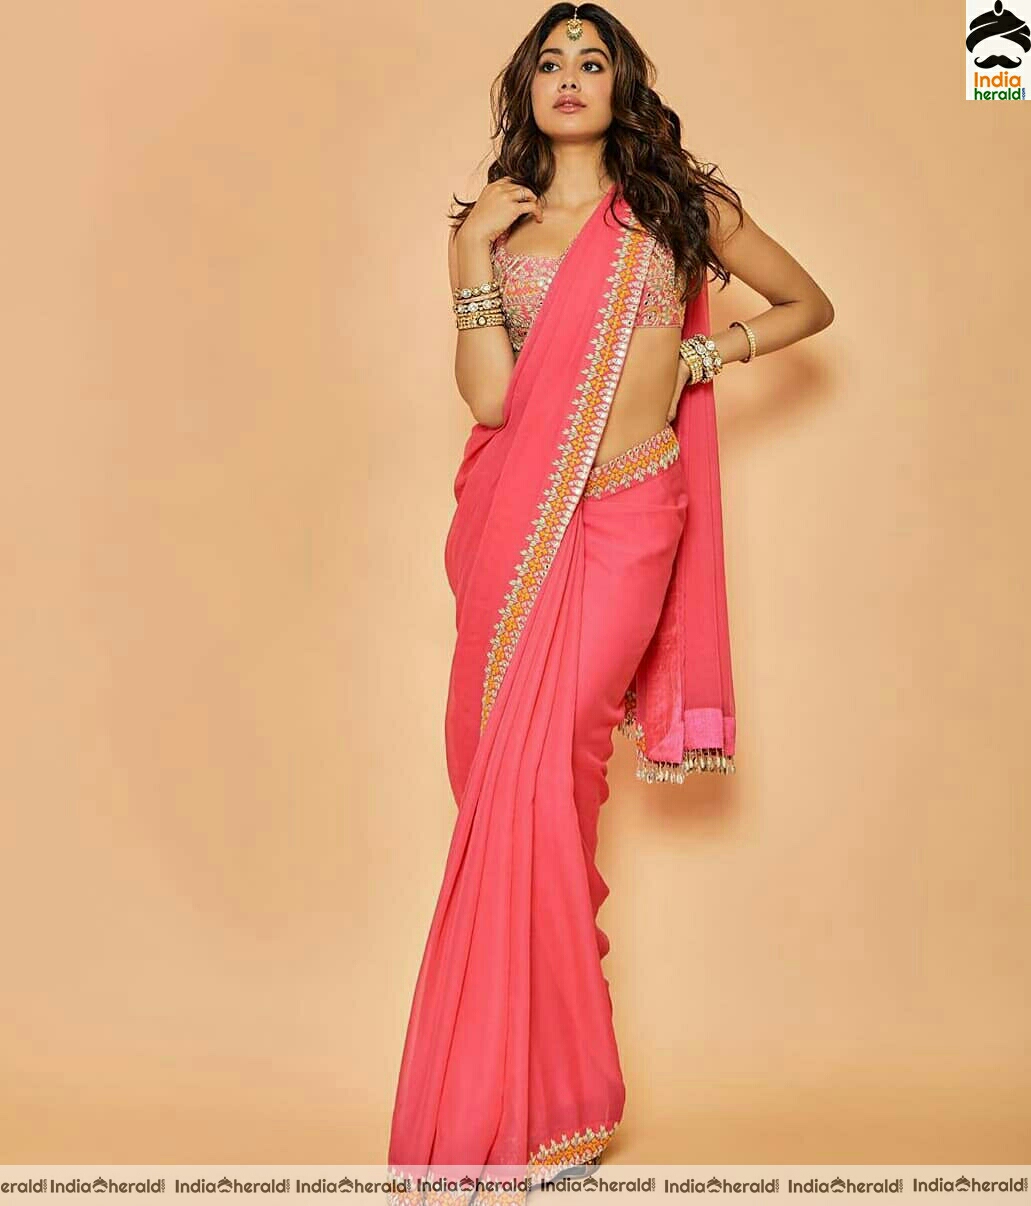 Janhvi Kapoor Hot Sleeveless Blouse and Pink Saree Stills